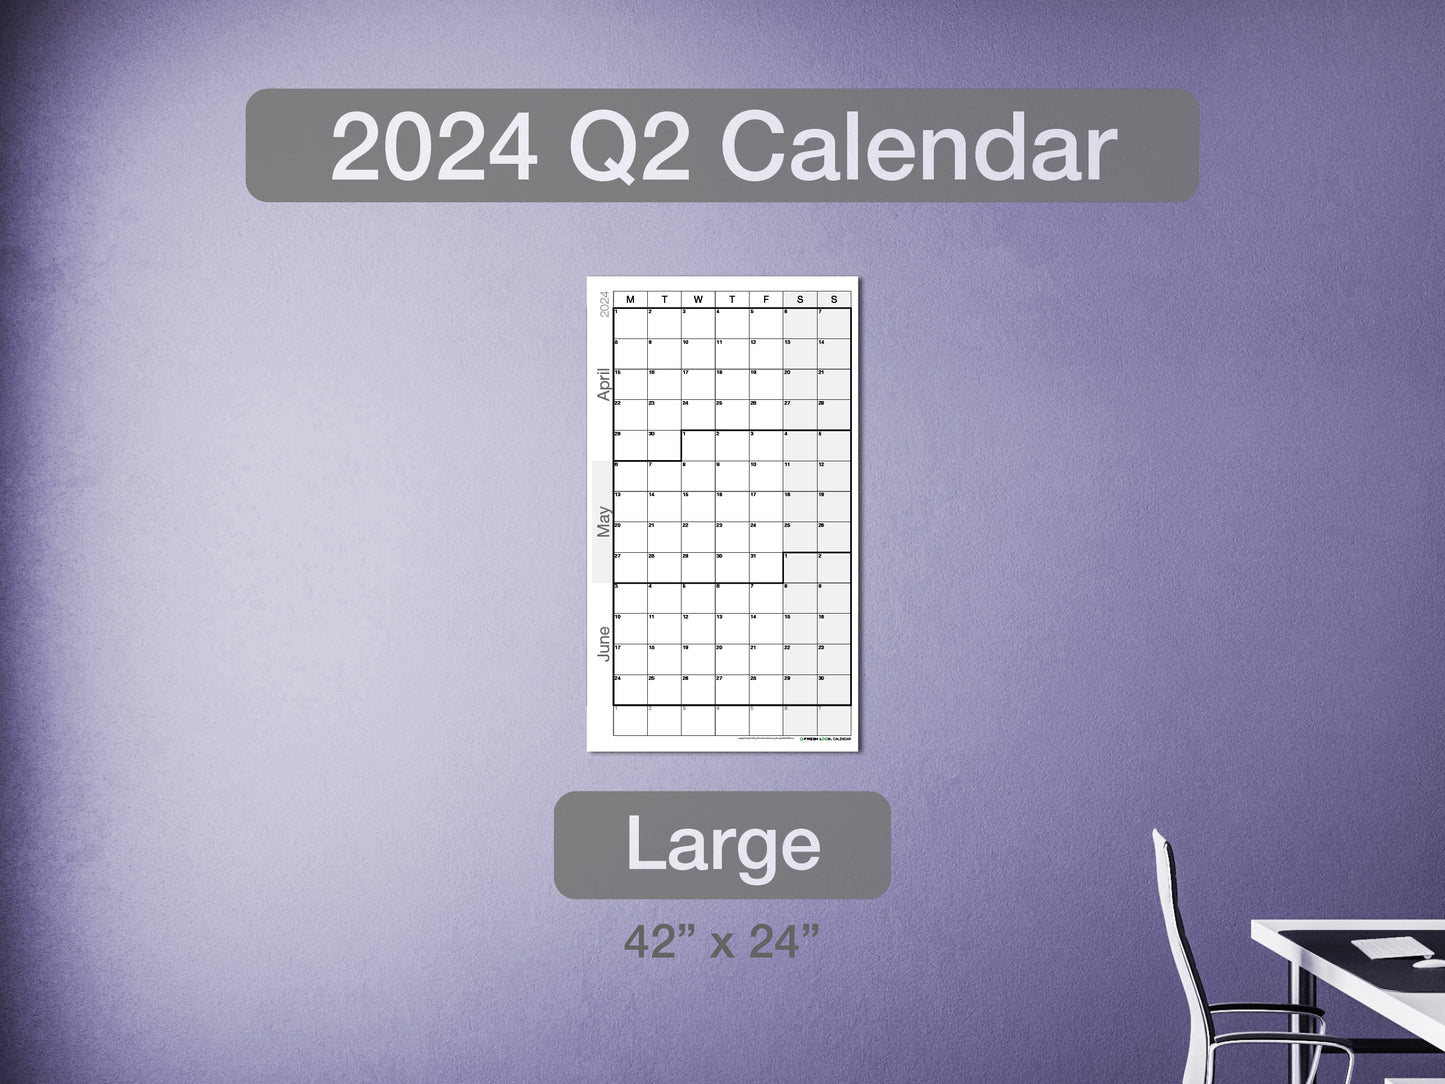 2024 Q2 Calendar Large